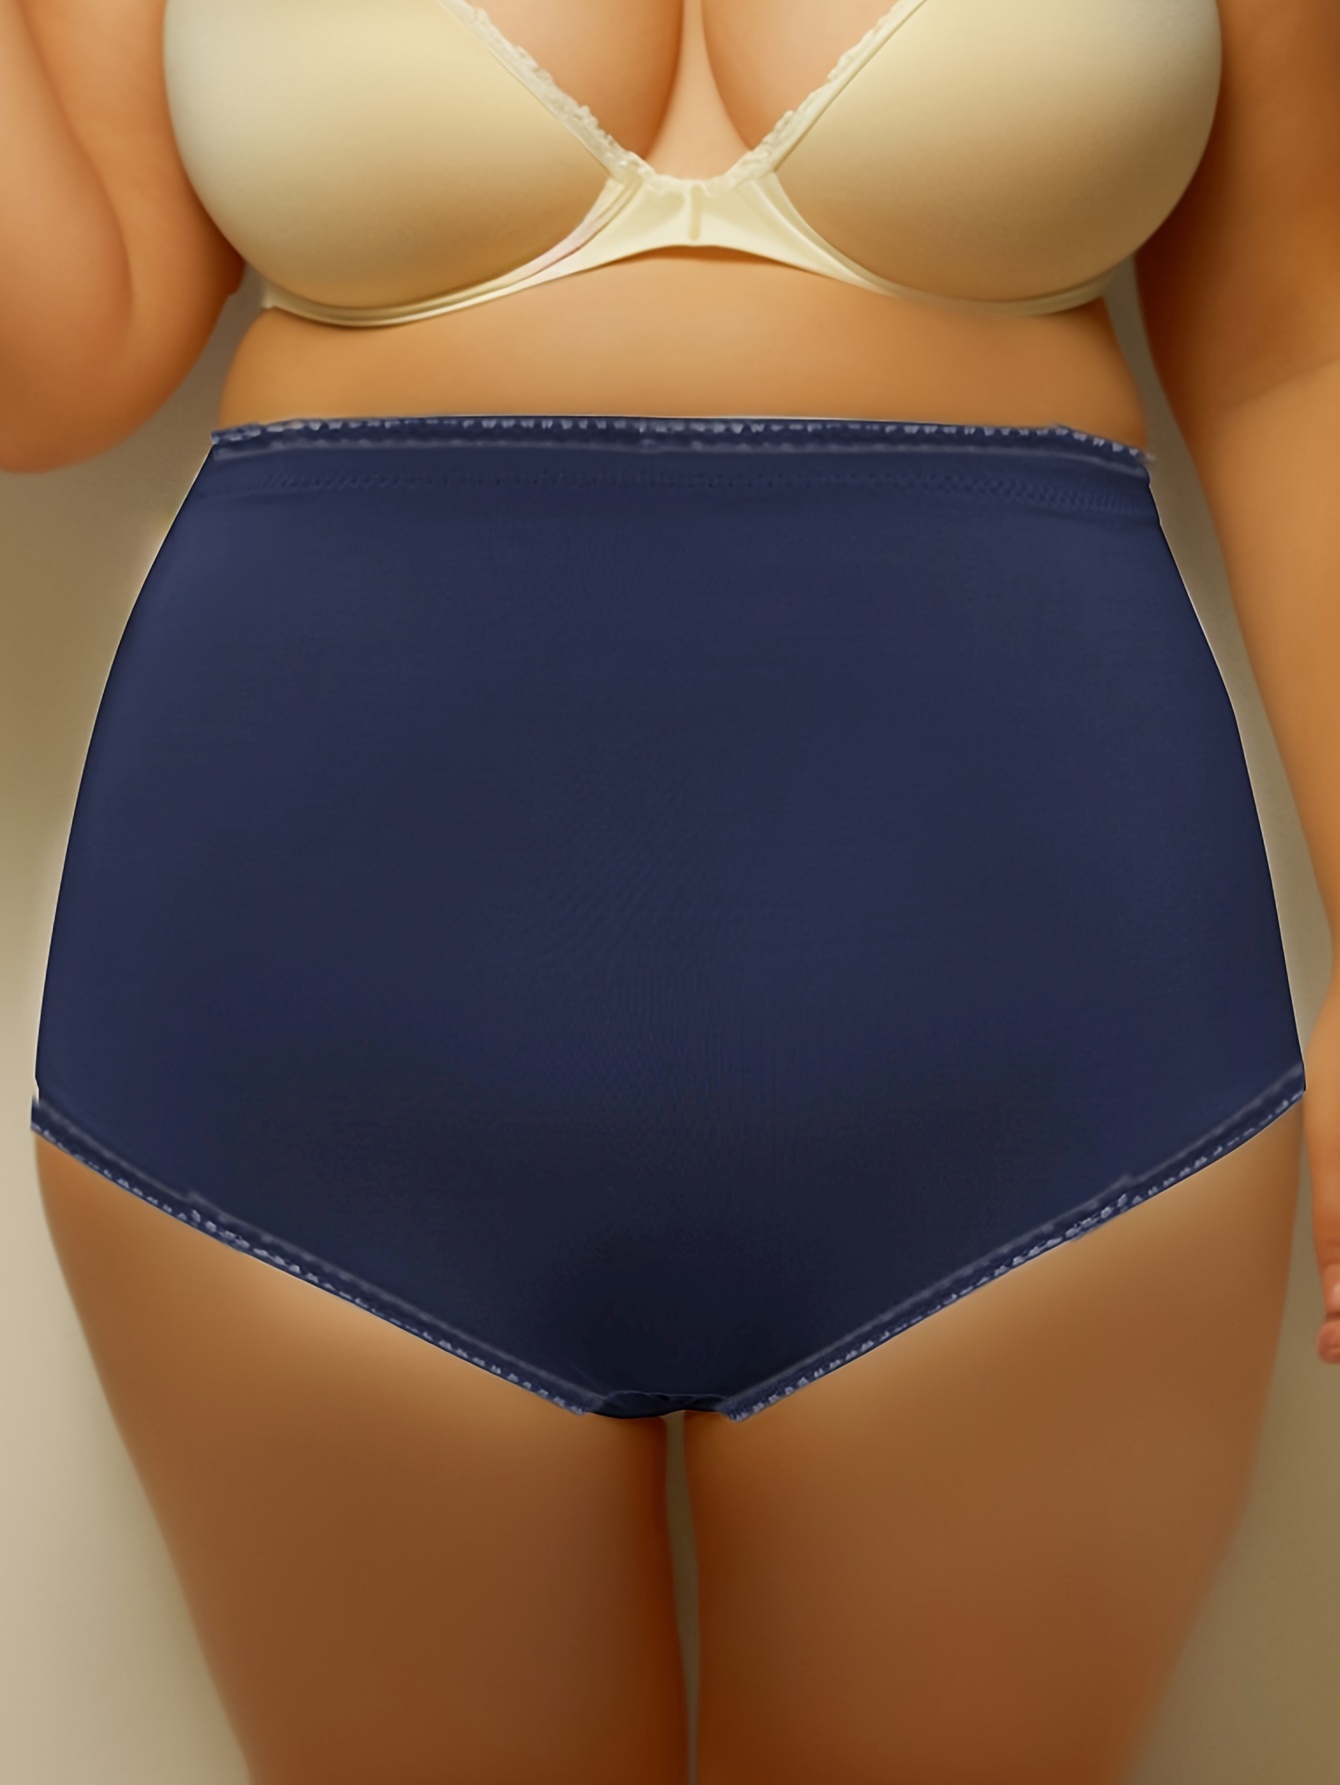 Buy SUPRMODL Seamless Underwear Women Stretch high Waist, Full